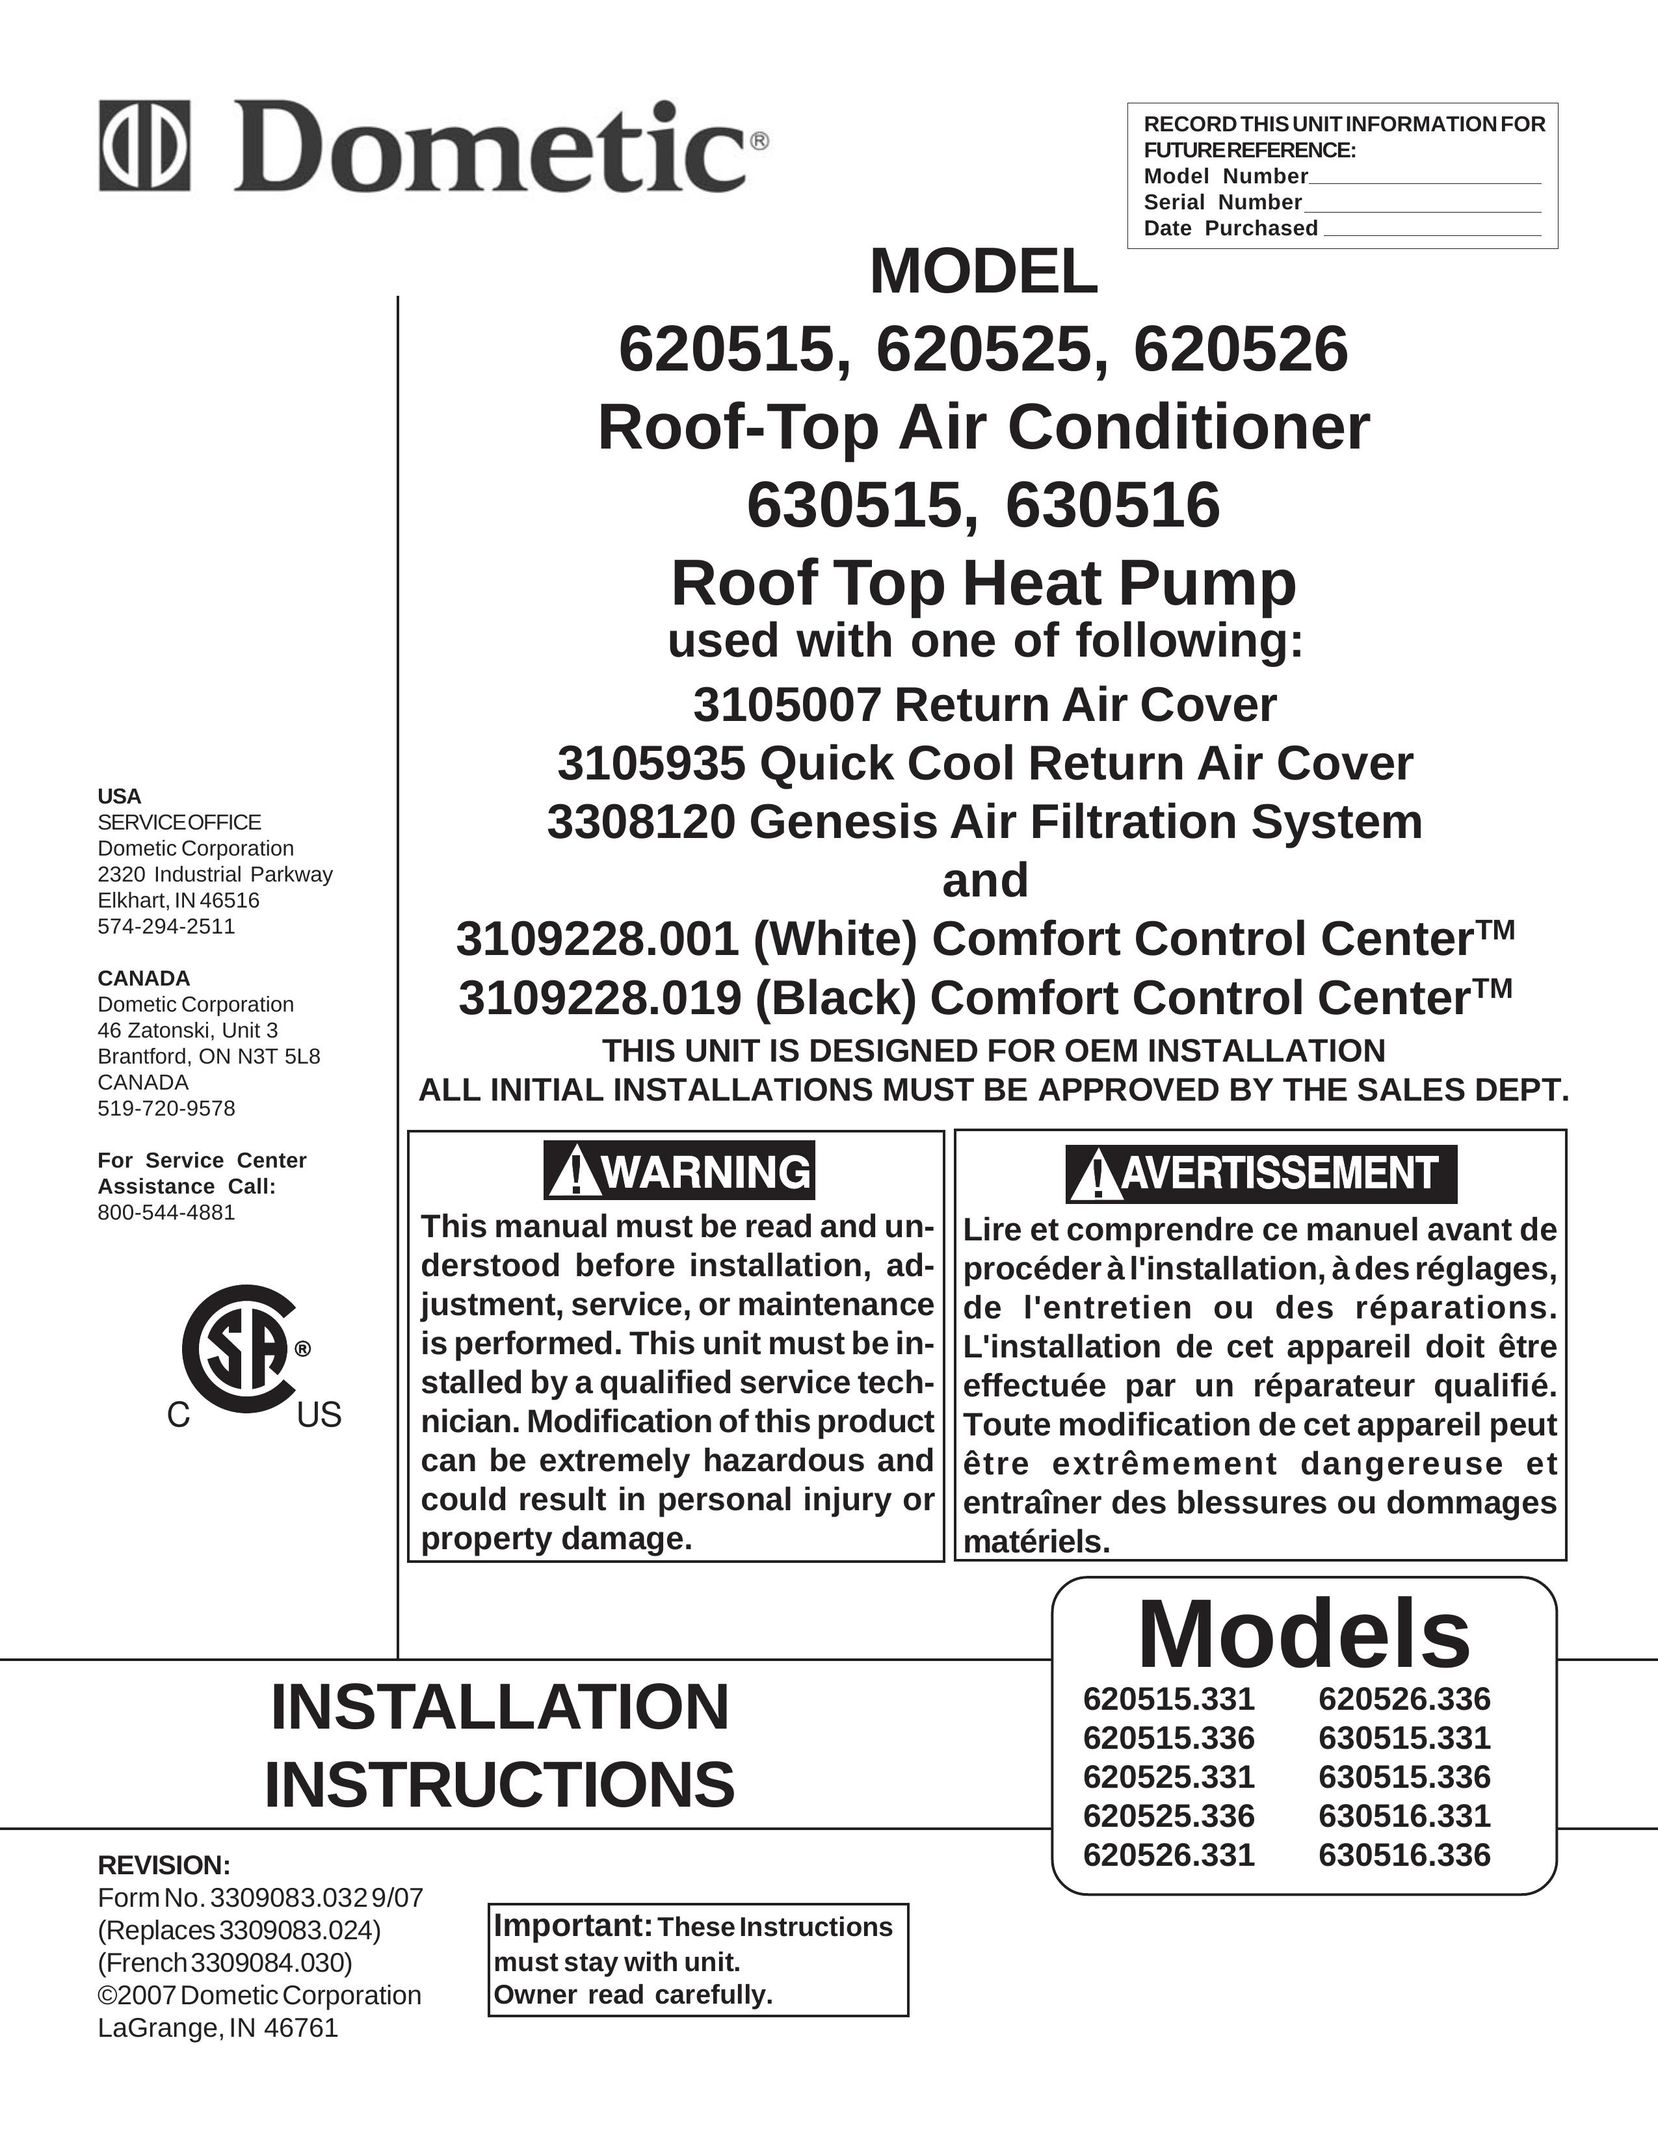 Dometic 620525.336 Air Conditioner User Manual